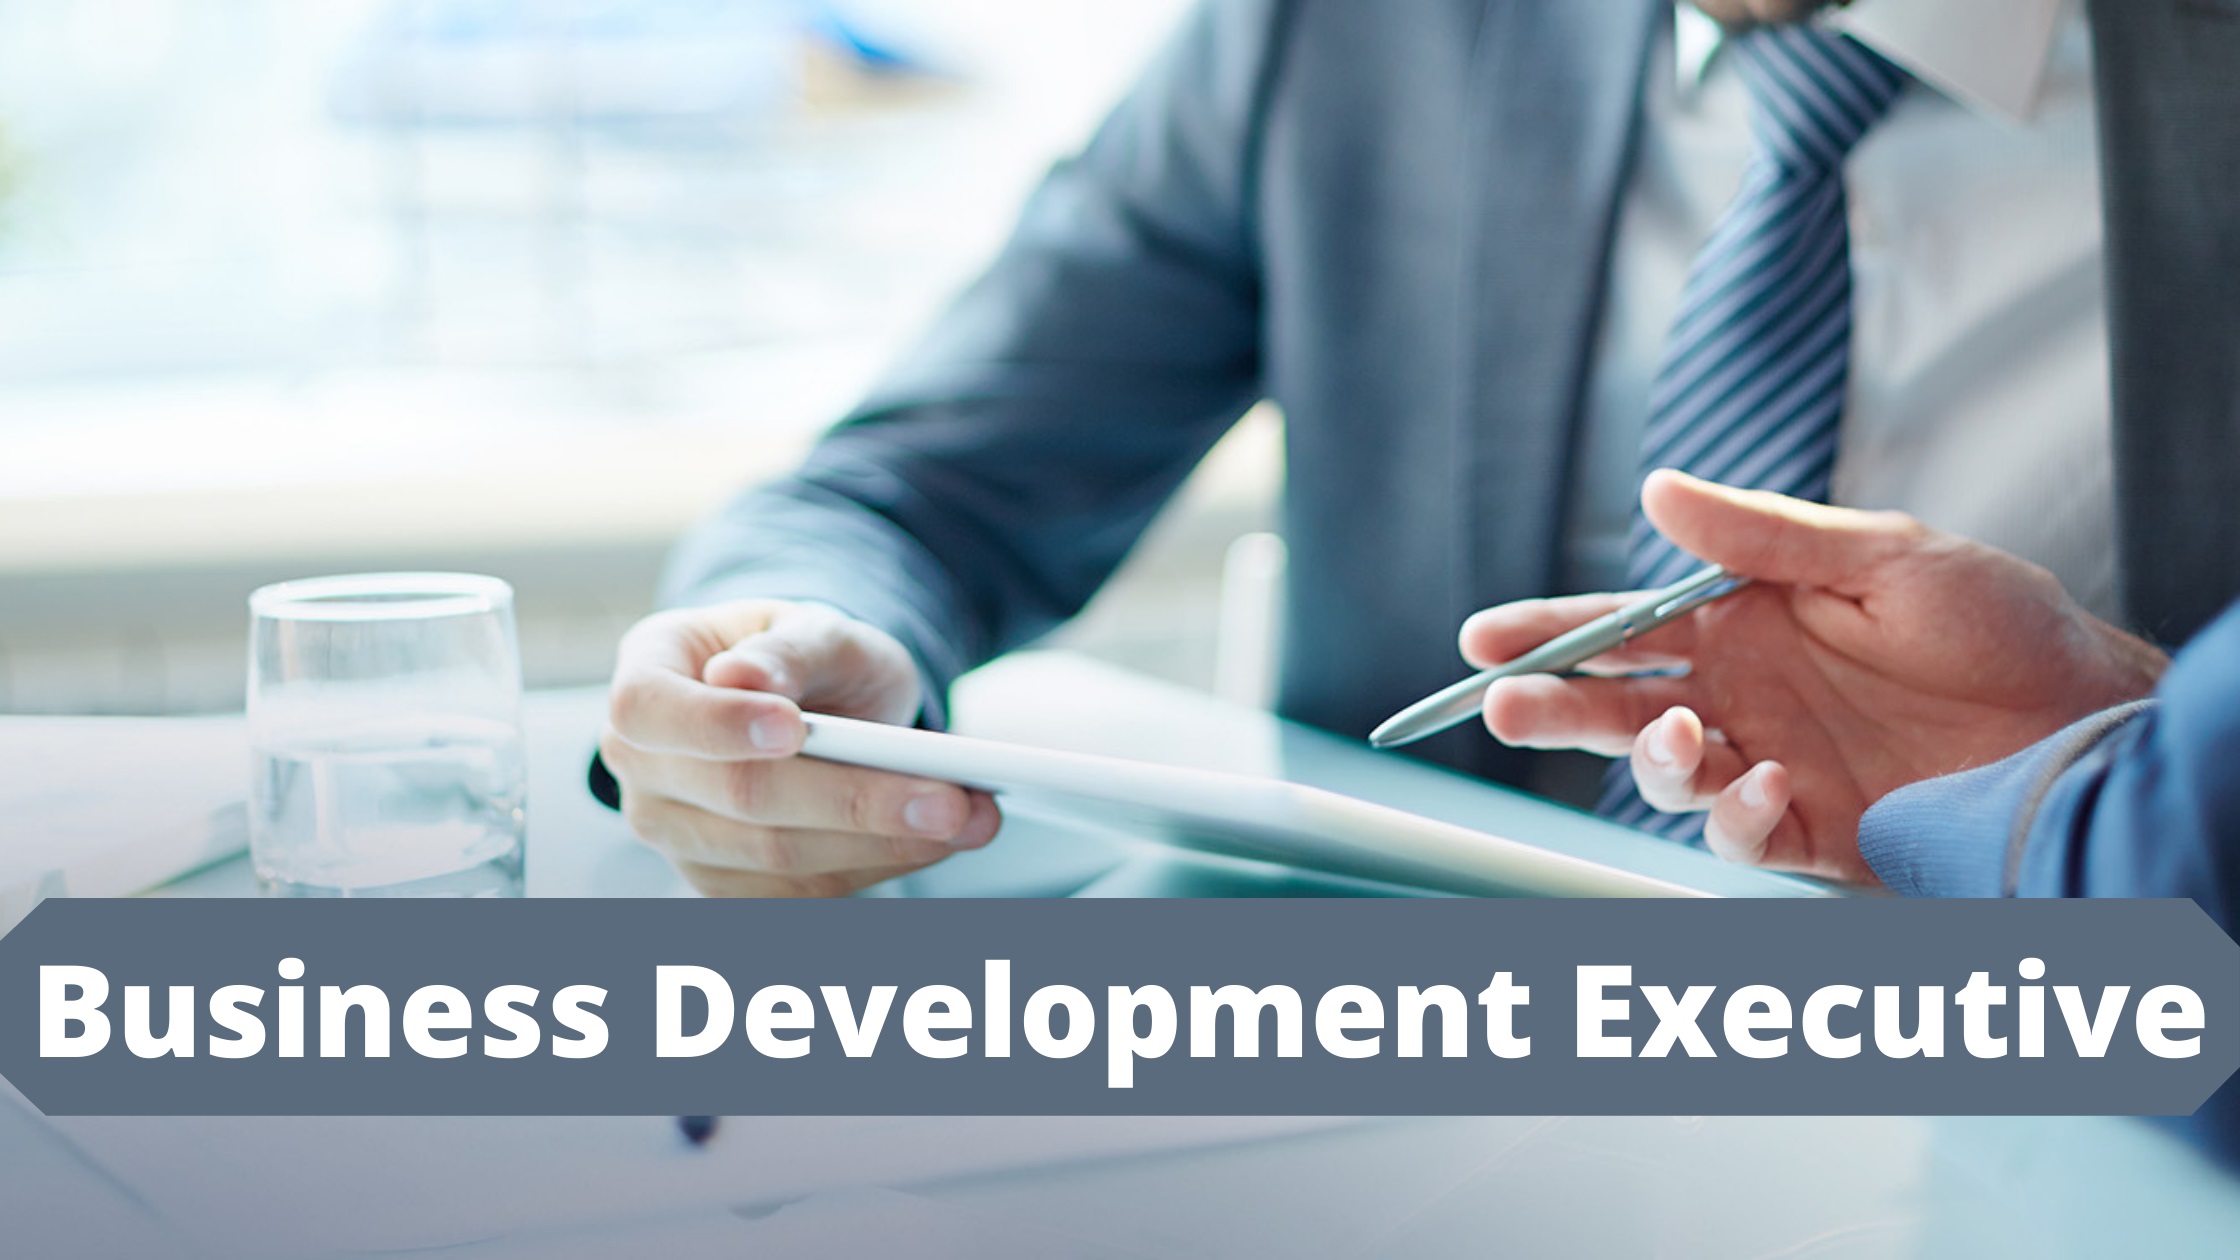 Business Development Executive 001-1607862820.jpg